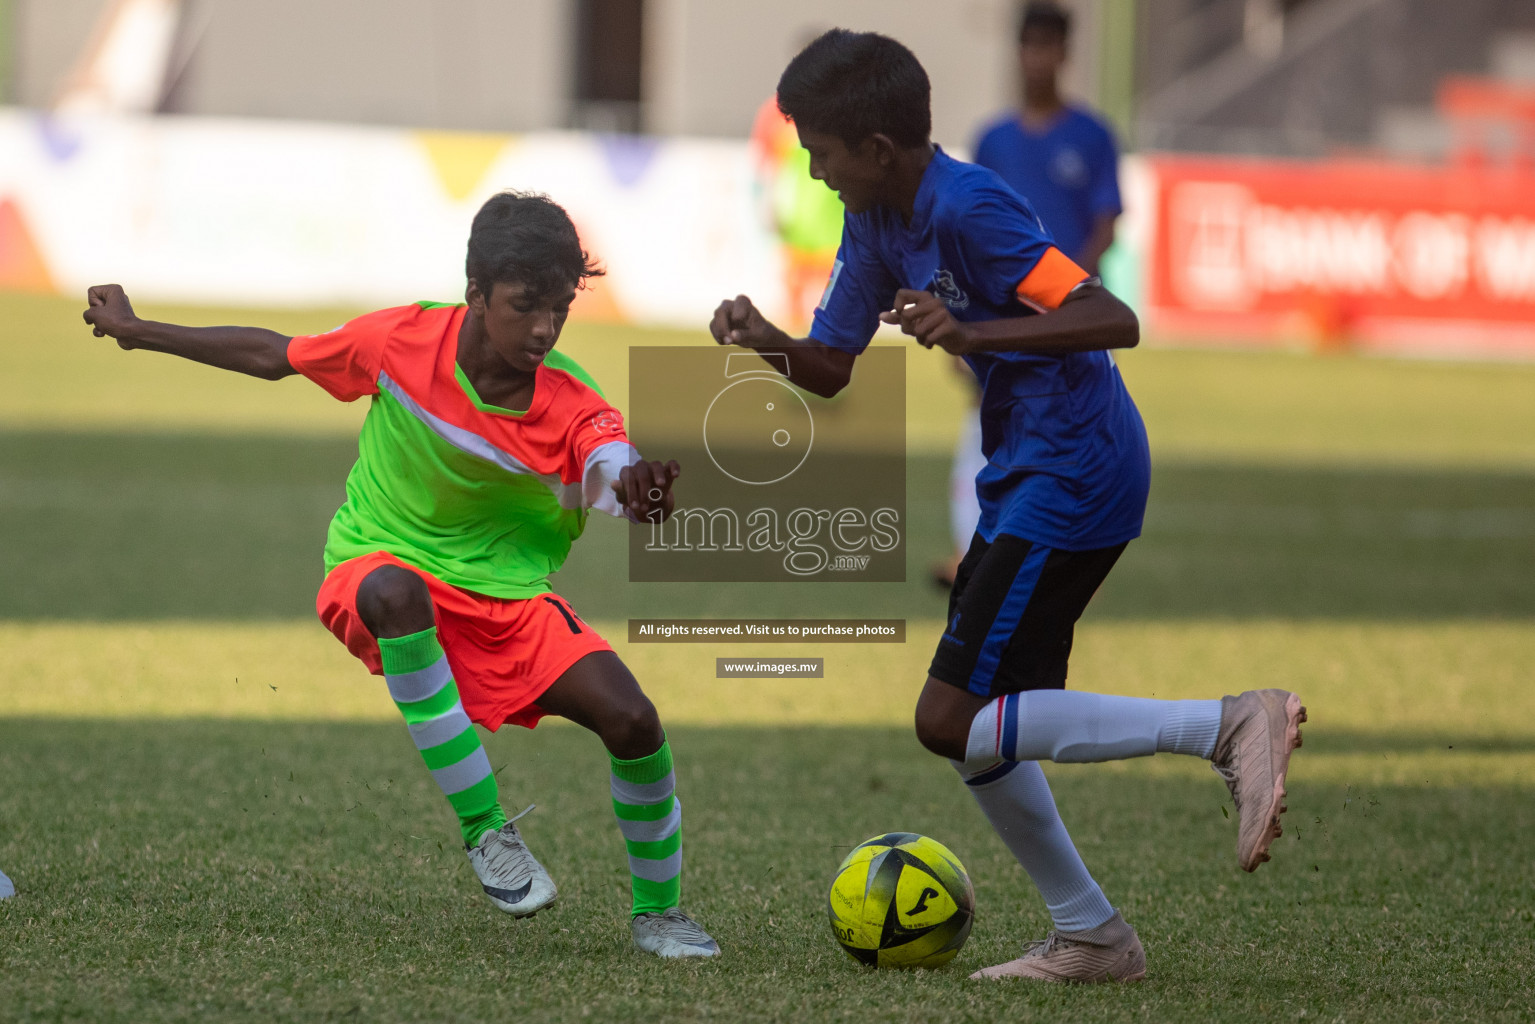 Dharumavantha School vs Ghaazee School in Mamen Inter-School Football Tournament 2019 (U15) on 10th March 2019, in Male' Maldives (Images.mv Photo: Hassan Simah)